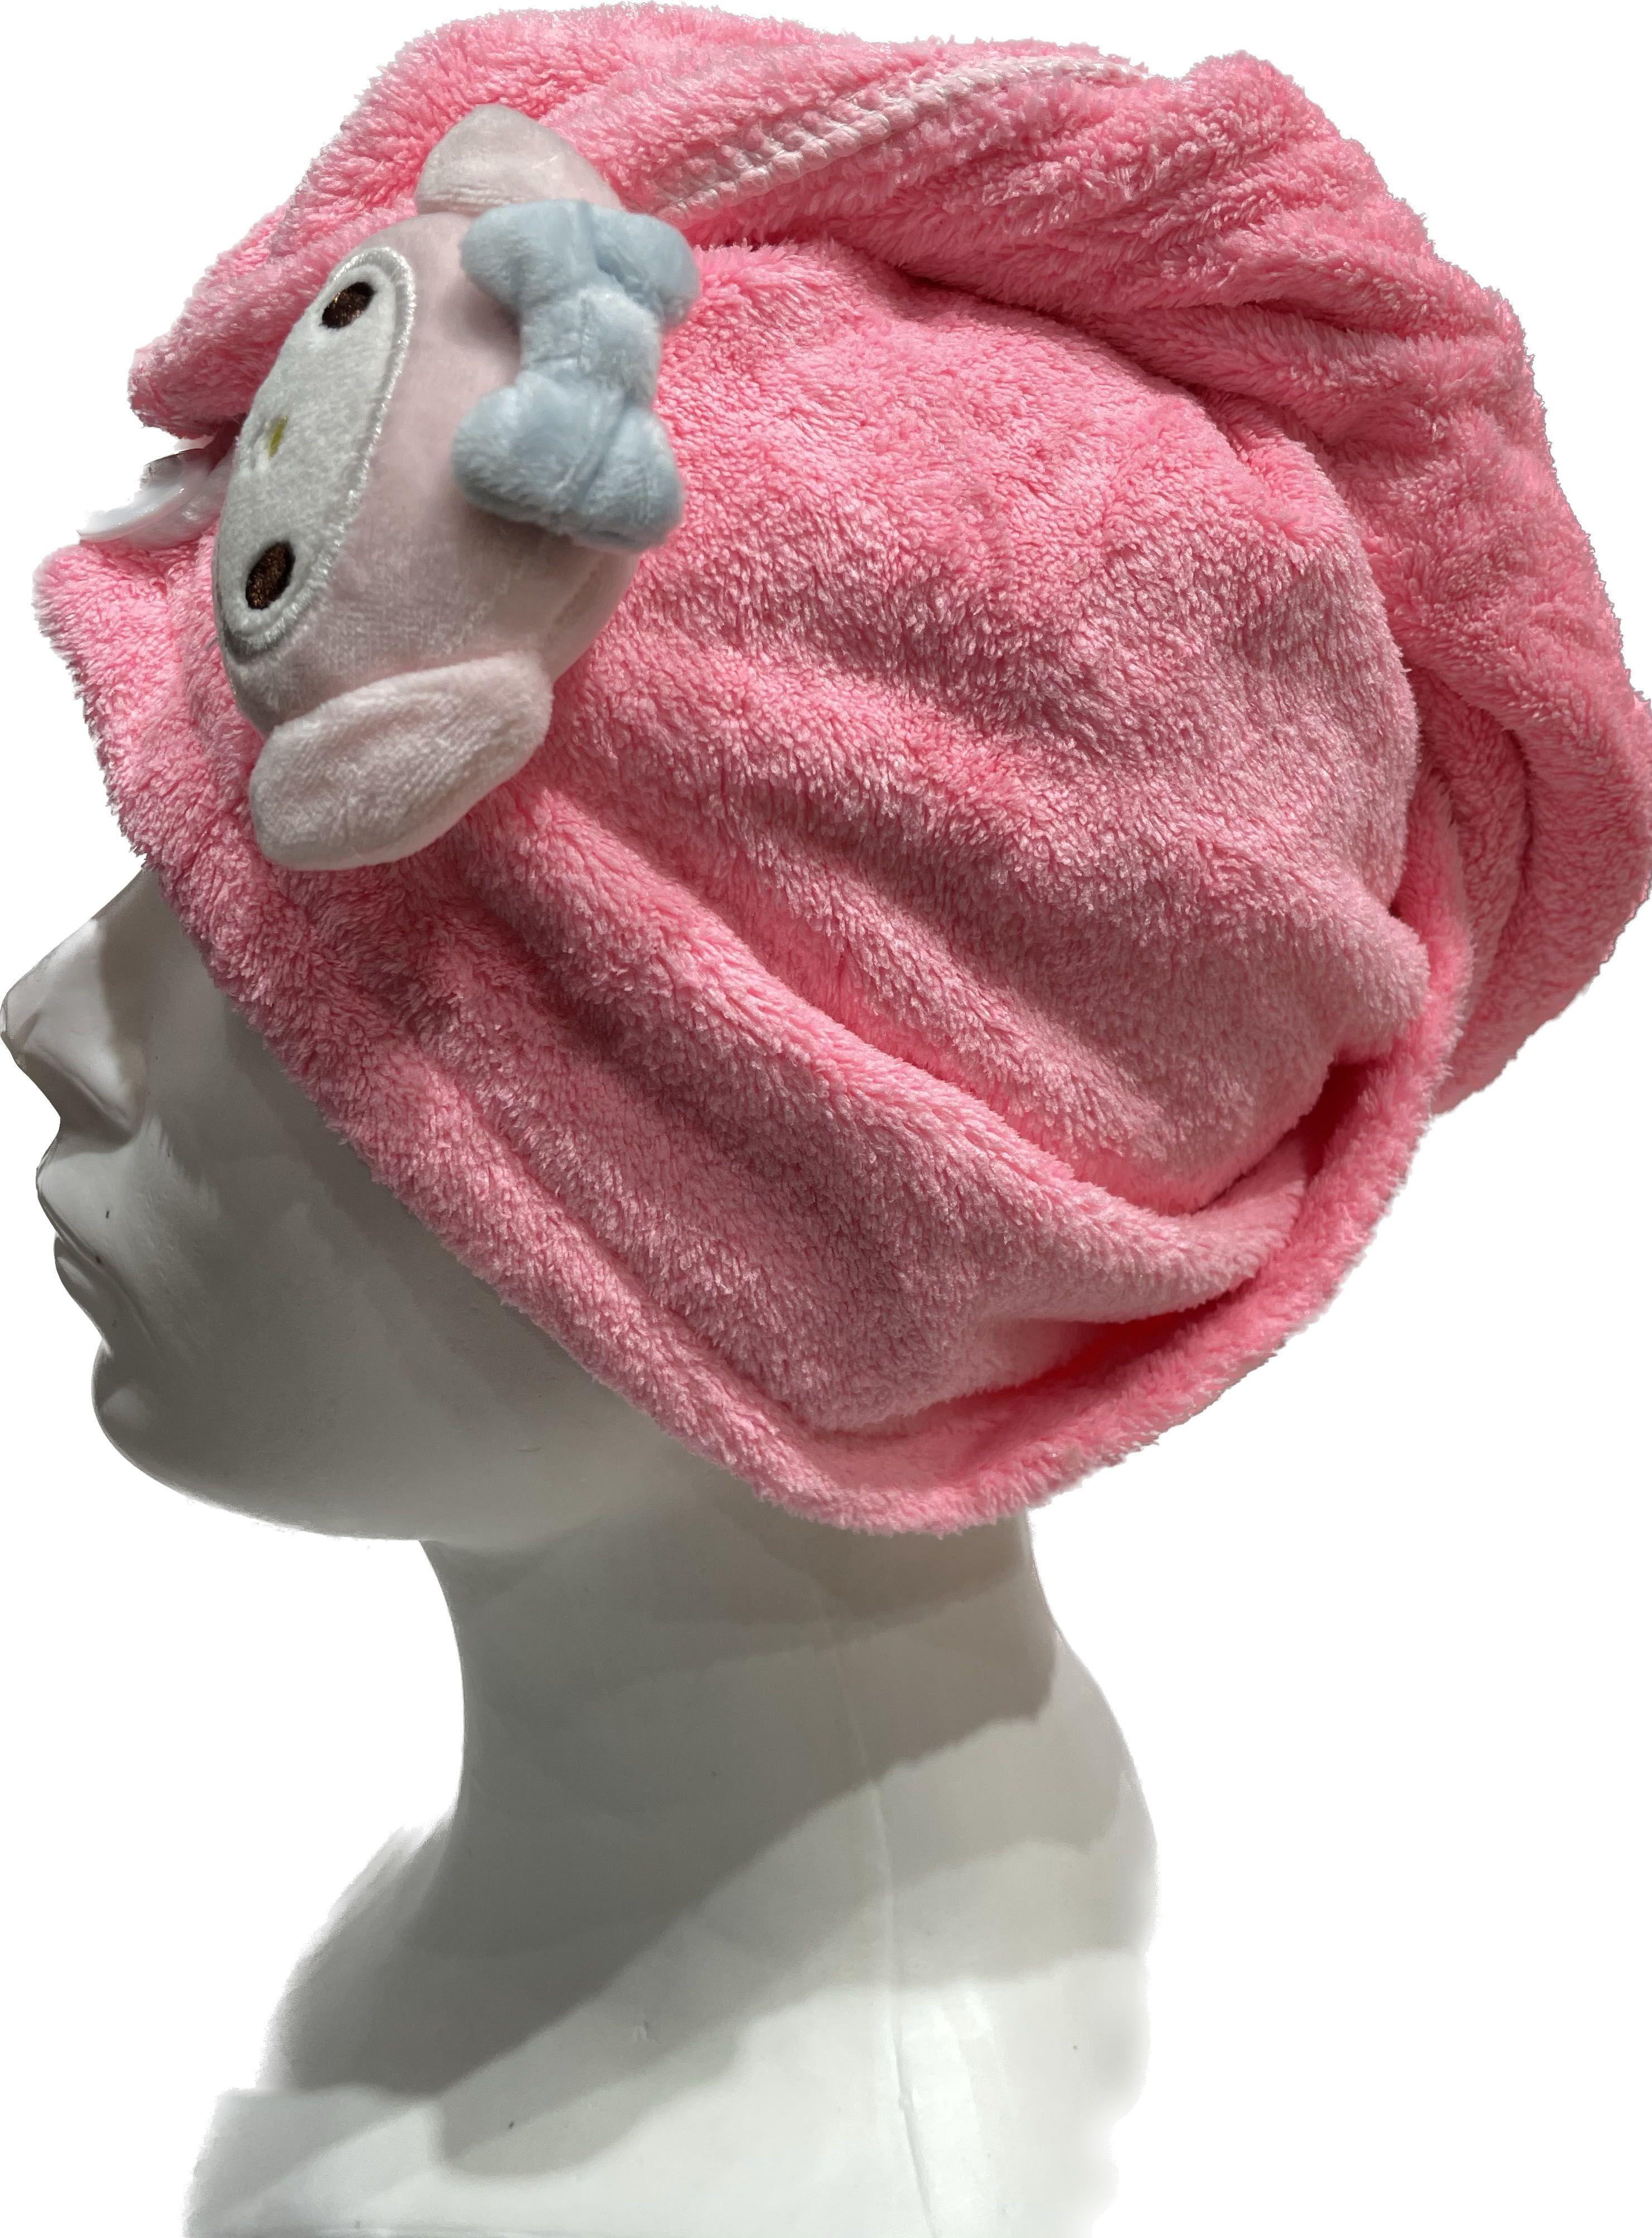 Super absorbent hair towel, hair turban - monkey pattern